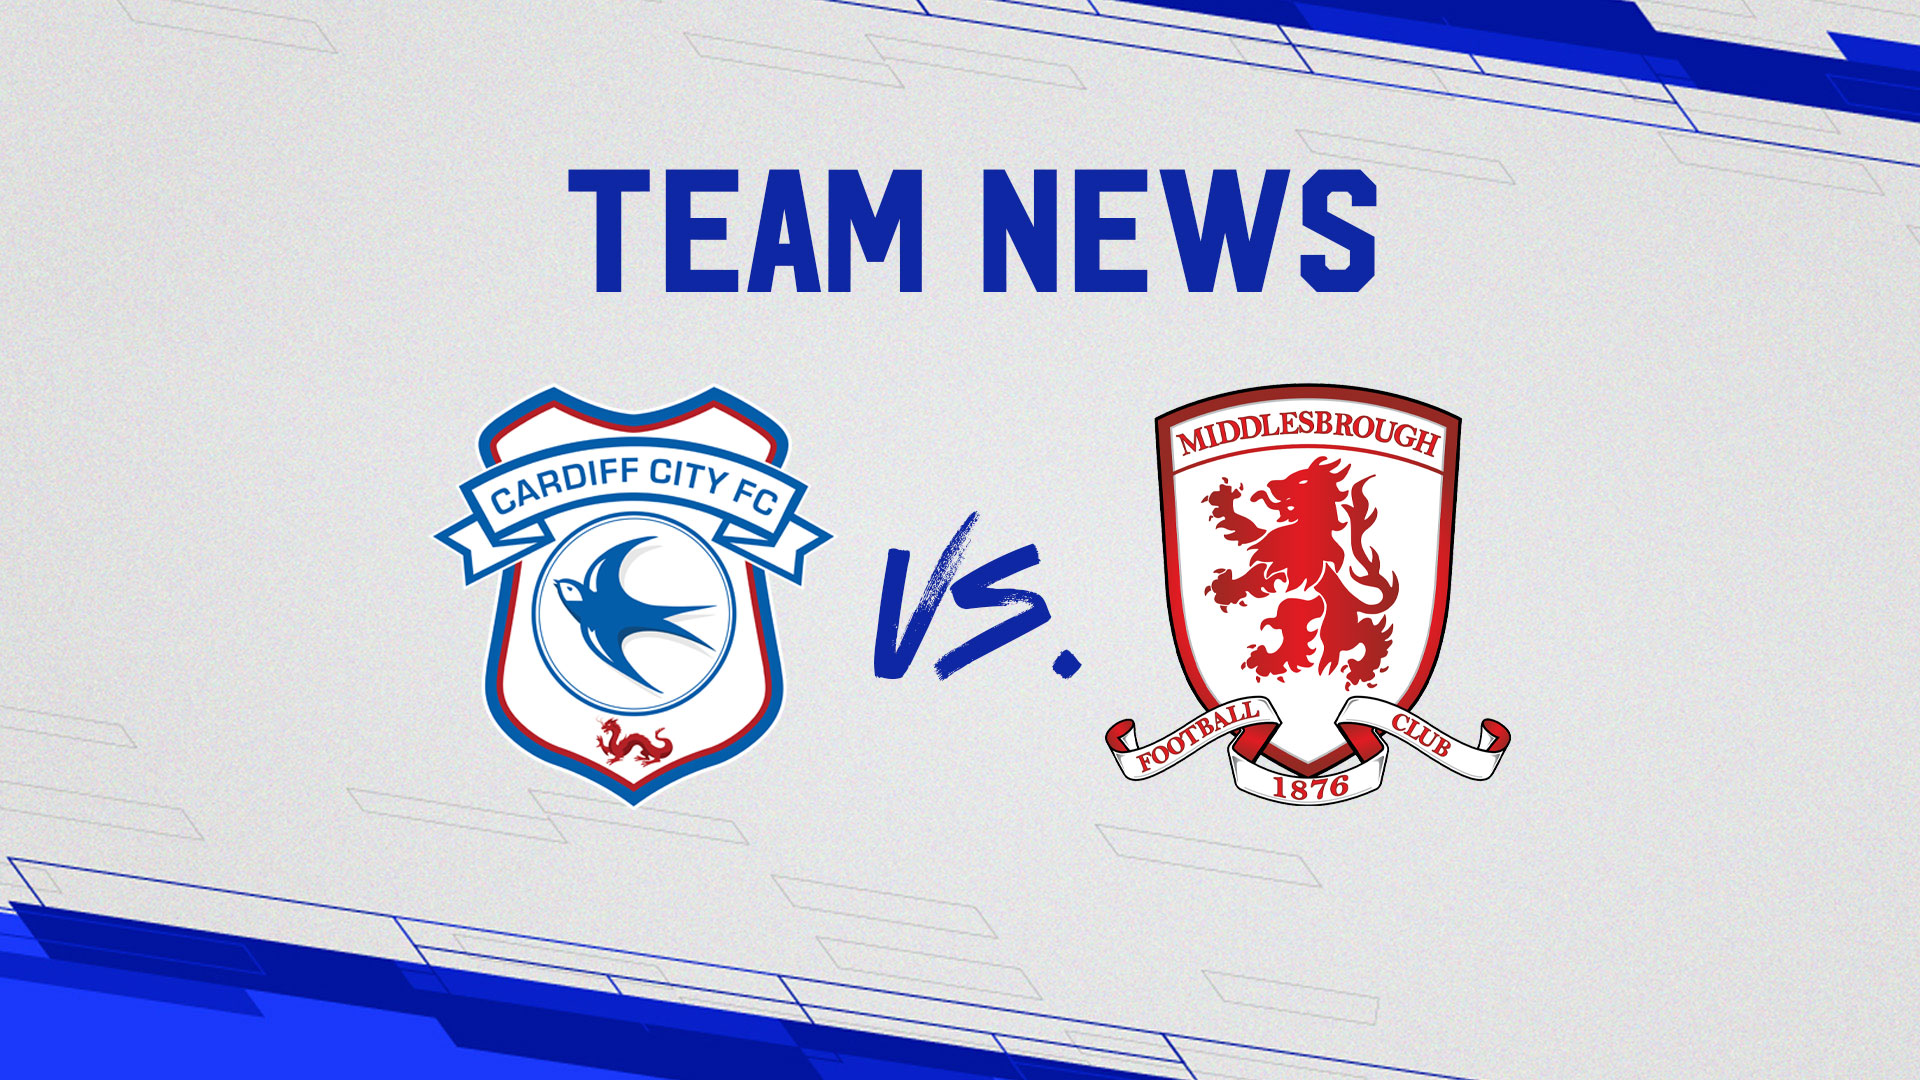 Team News: Cardiff City vs. Middlesbrough